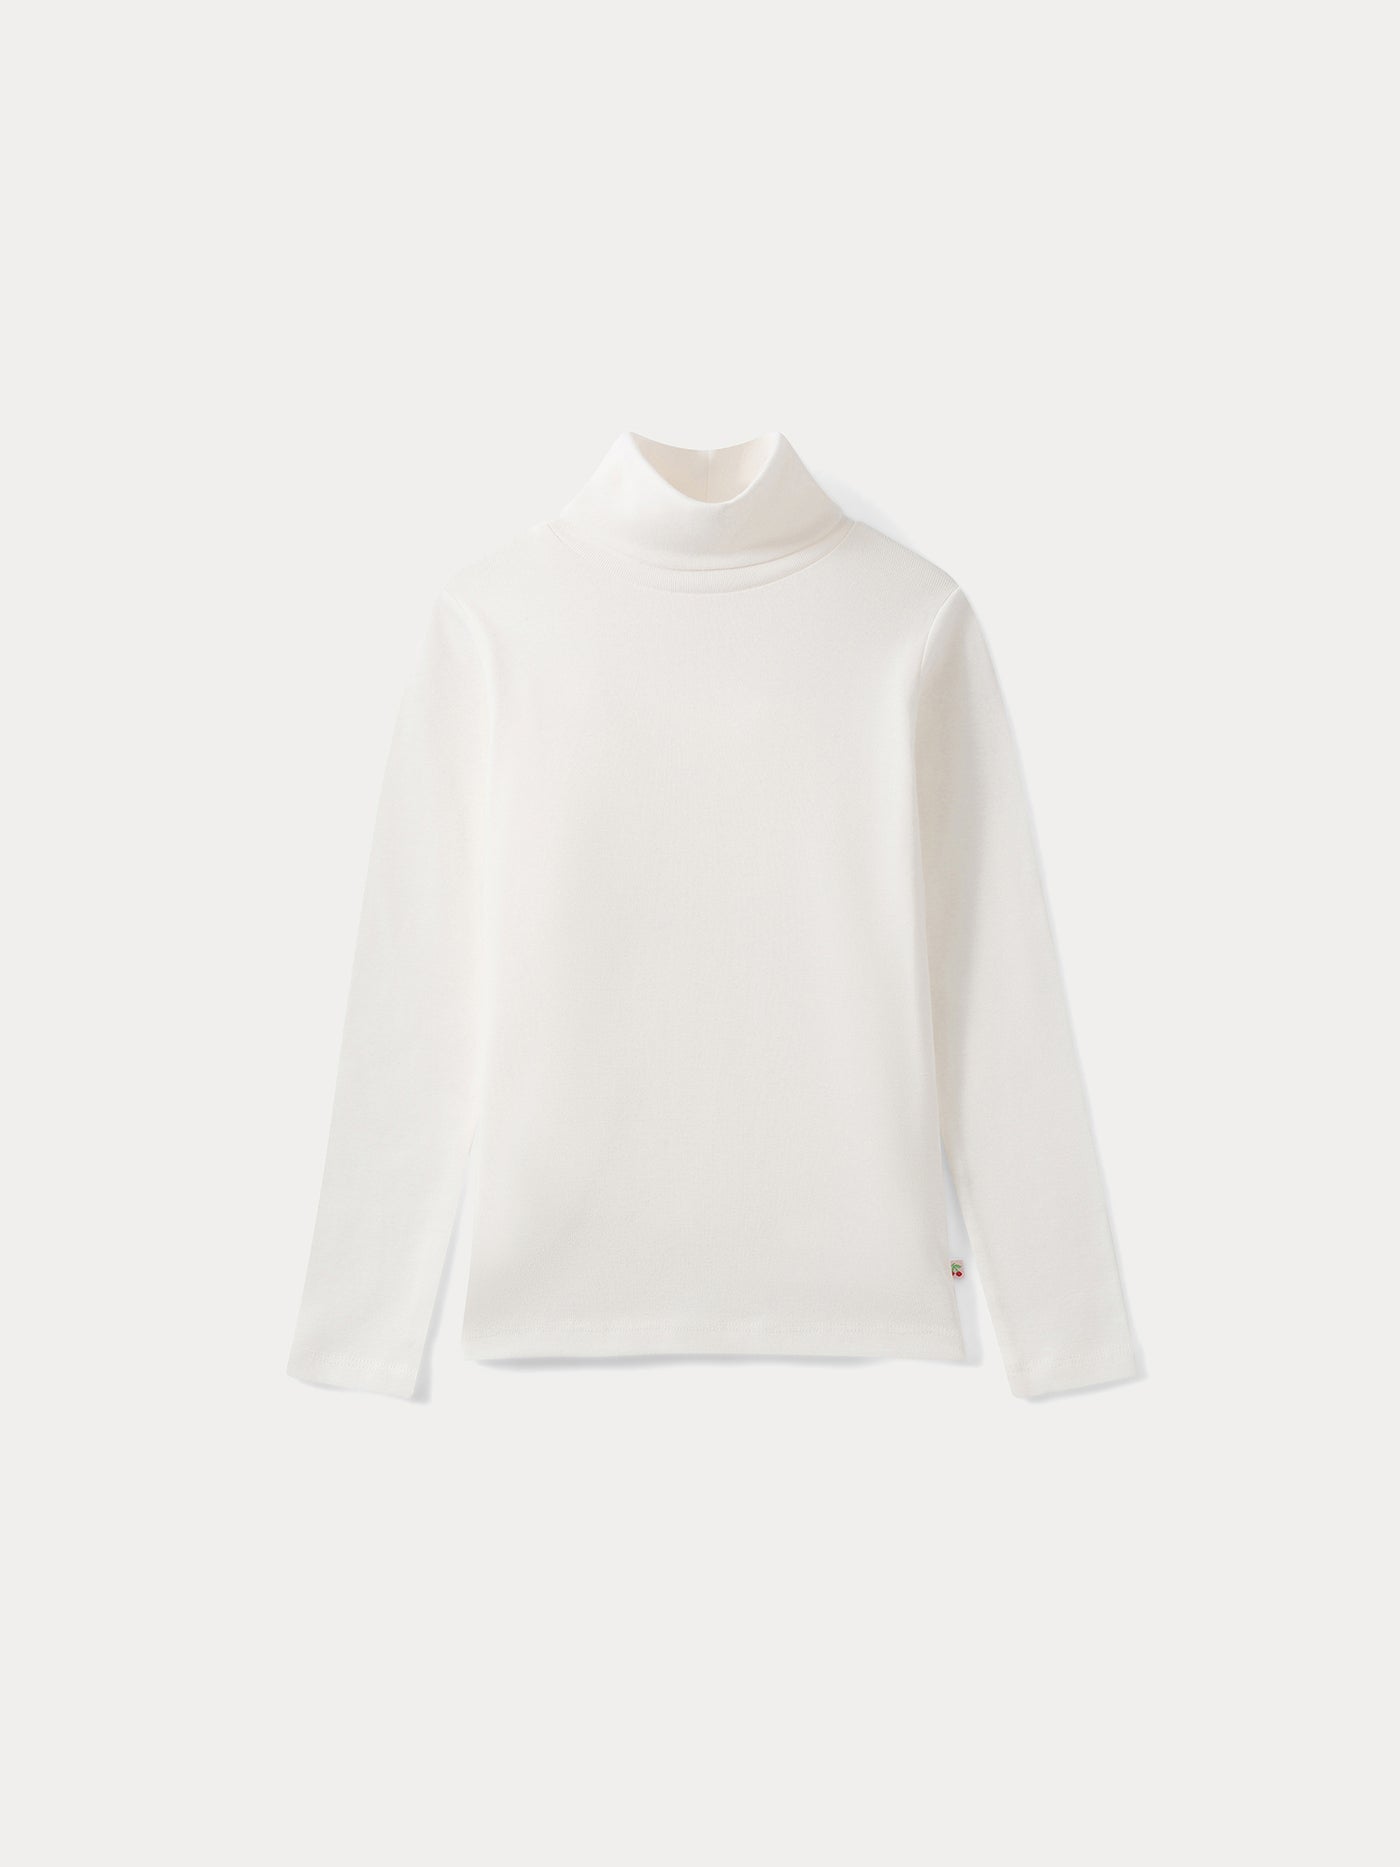 Thin turtleneck sweater milk white